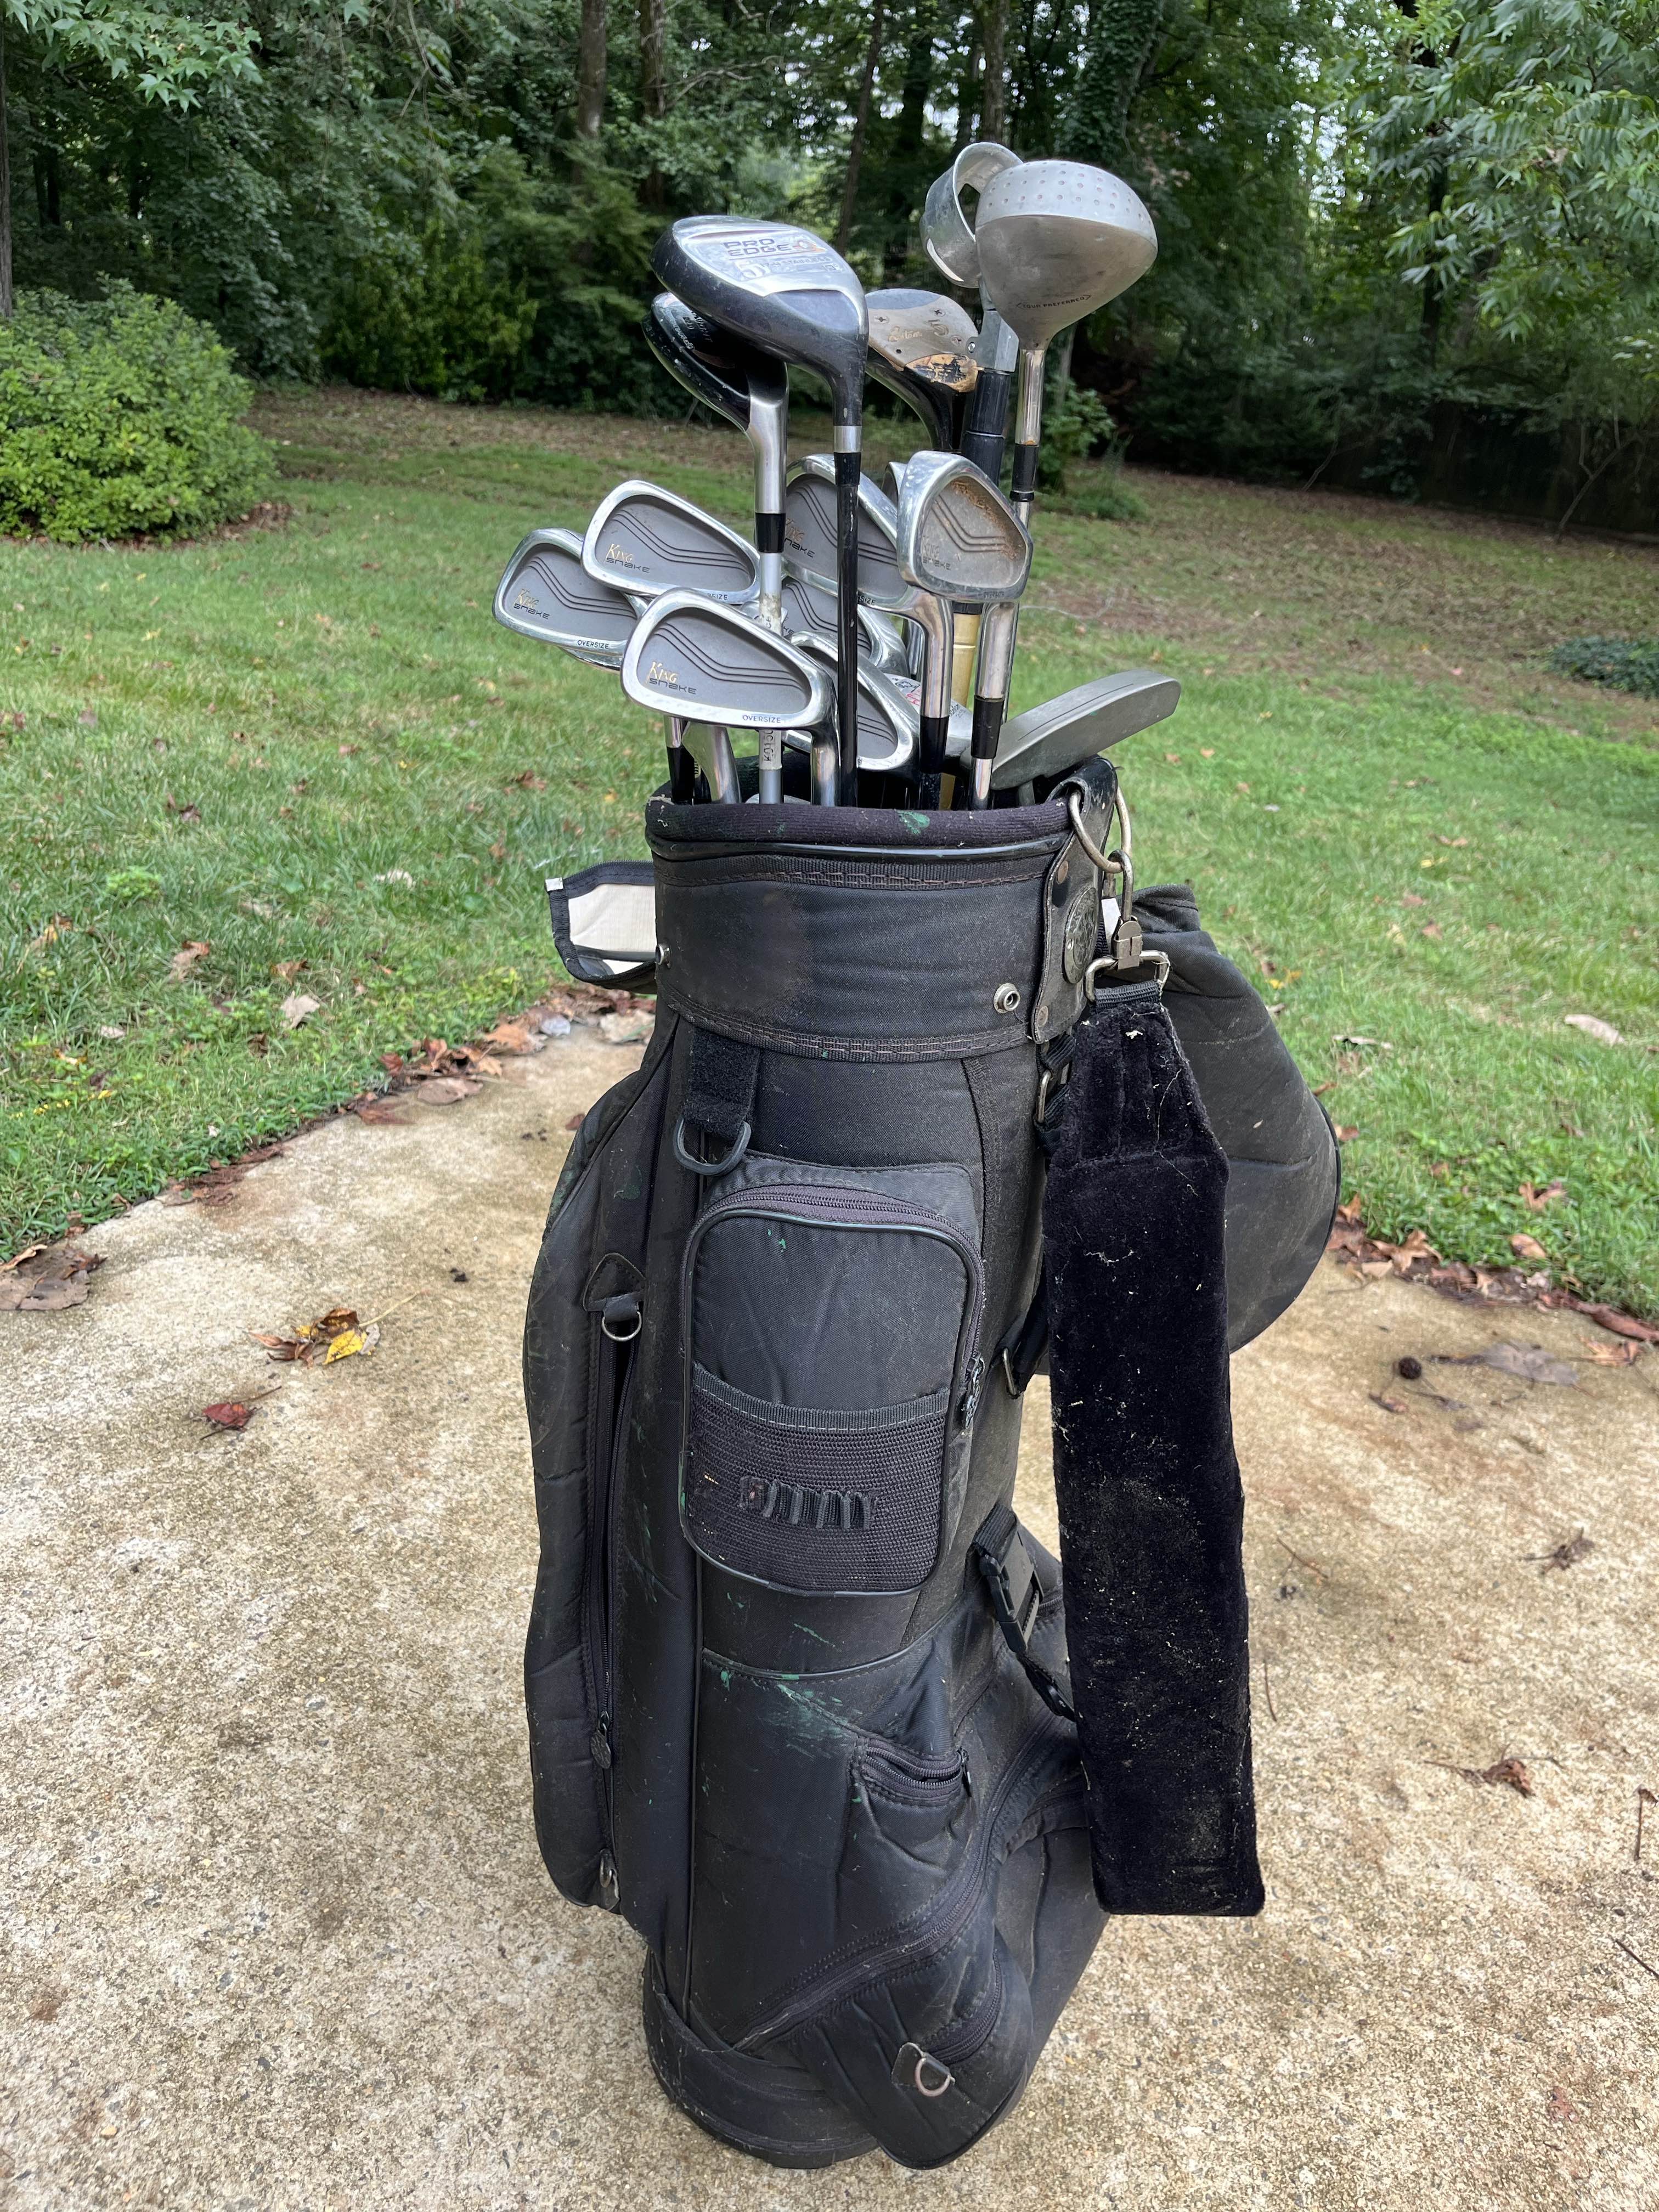 Sold at Auction: Gucci Black Golf Bag And Umbrella